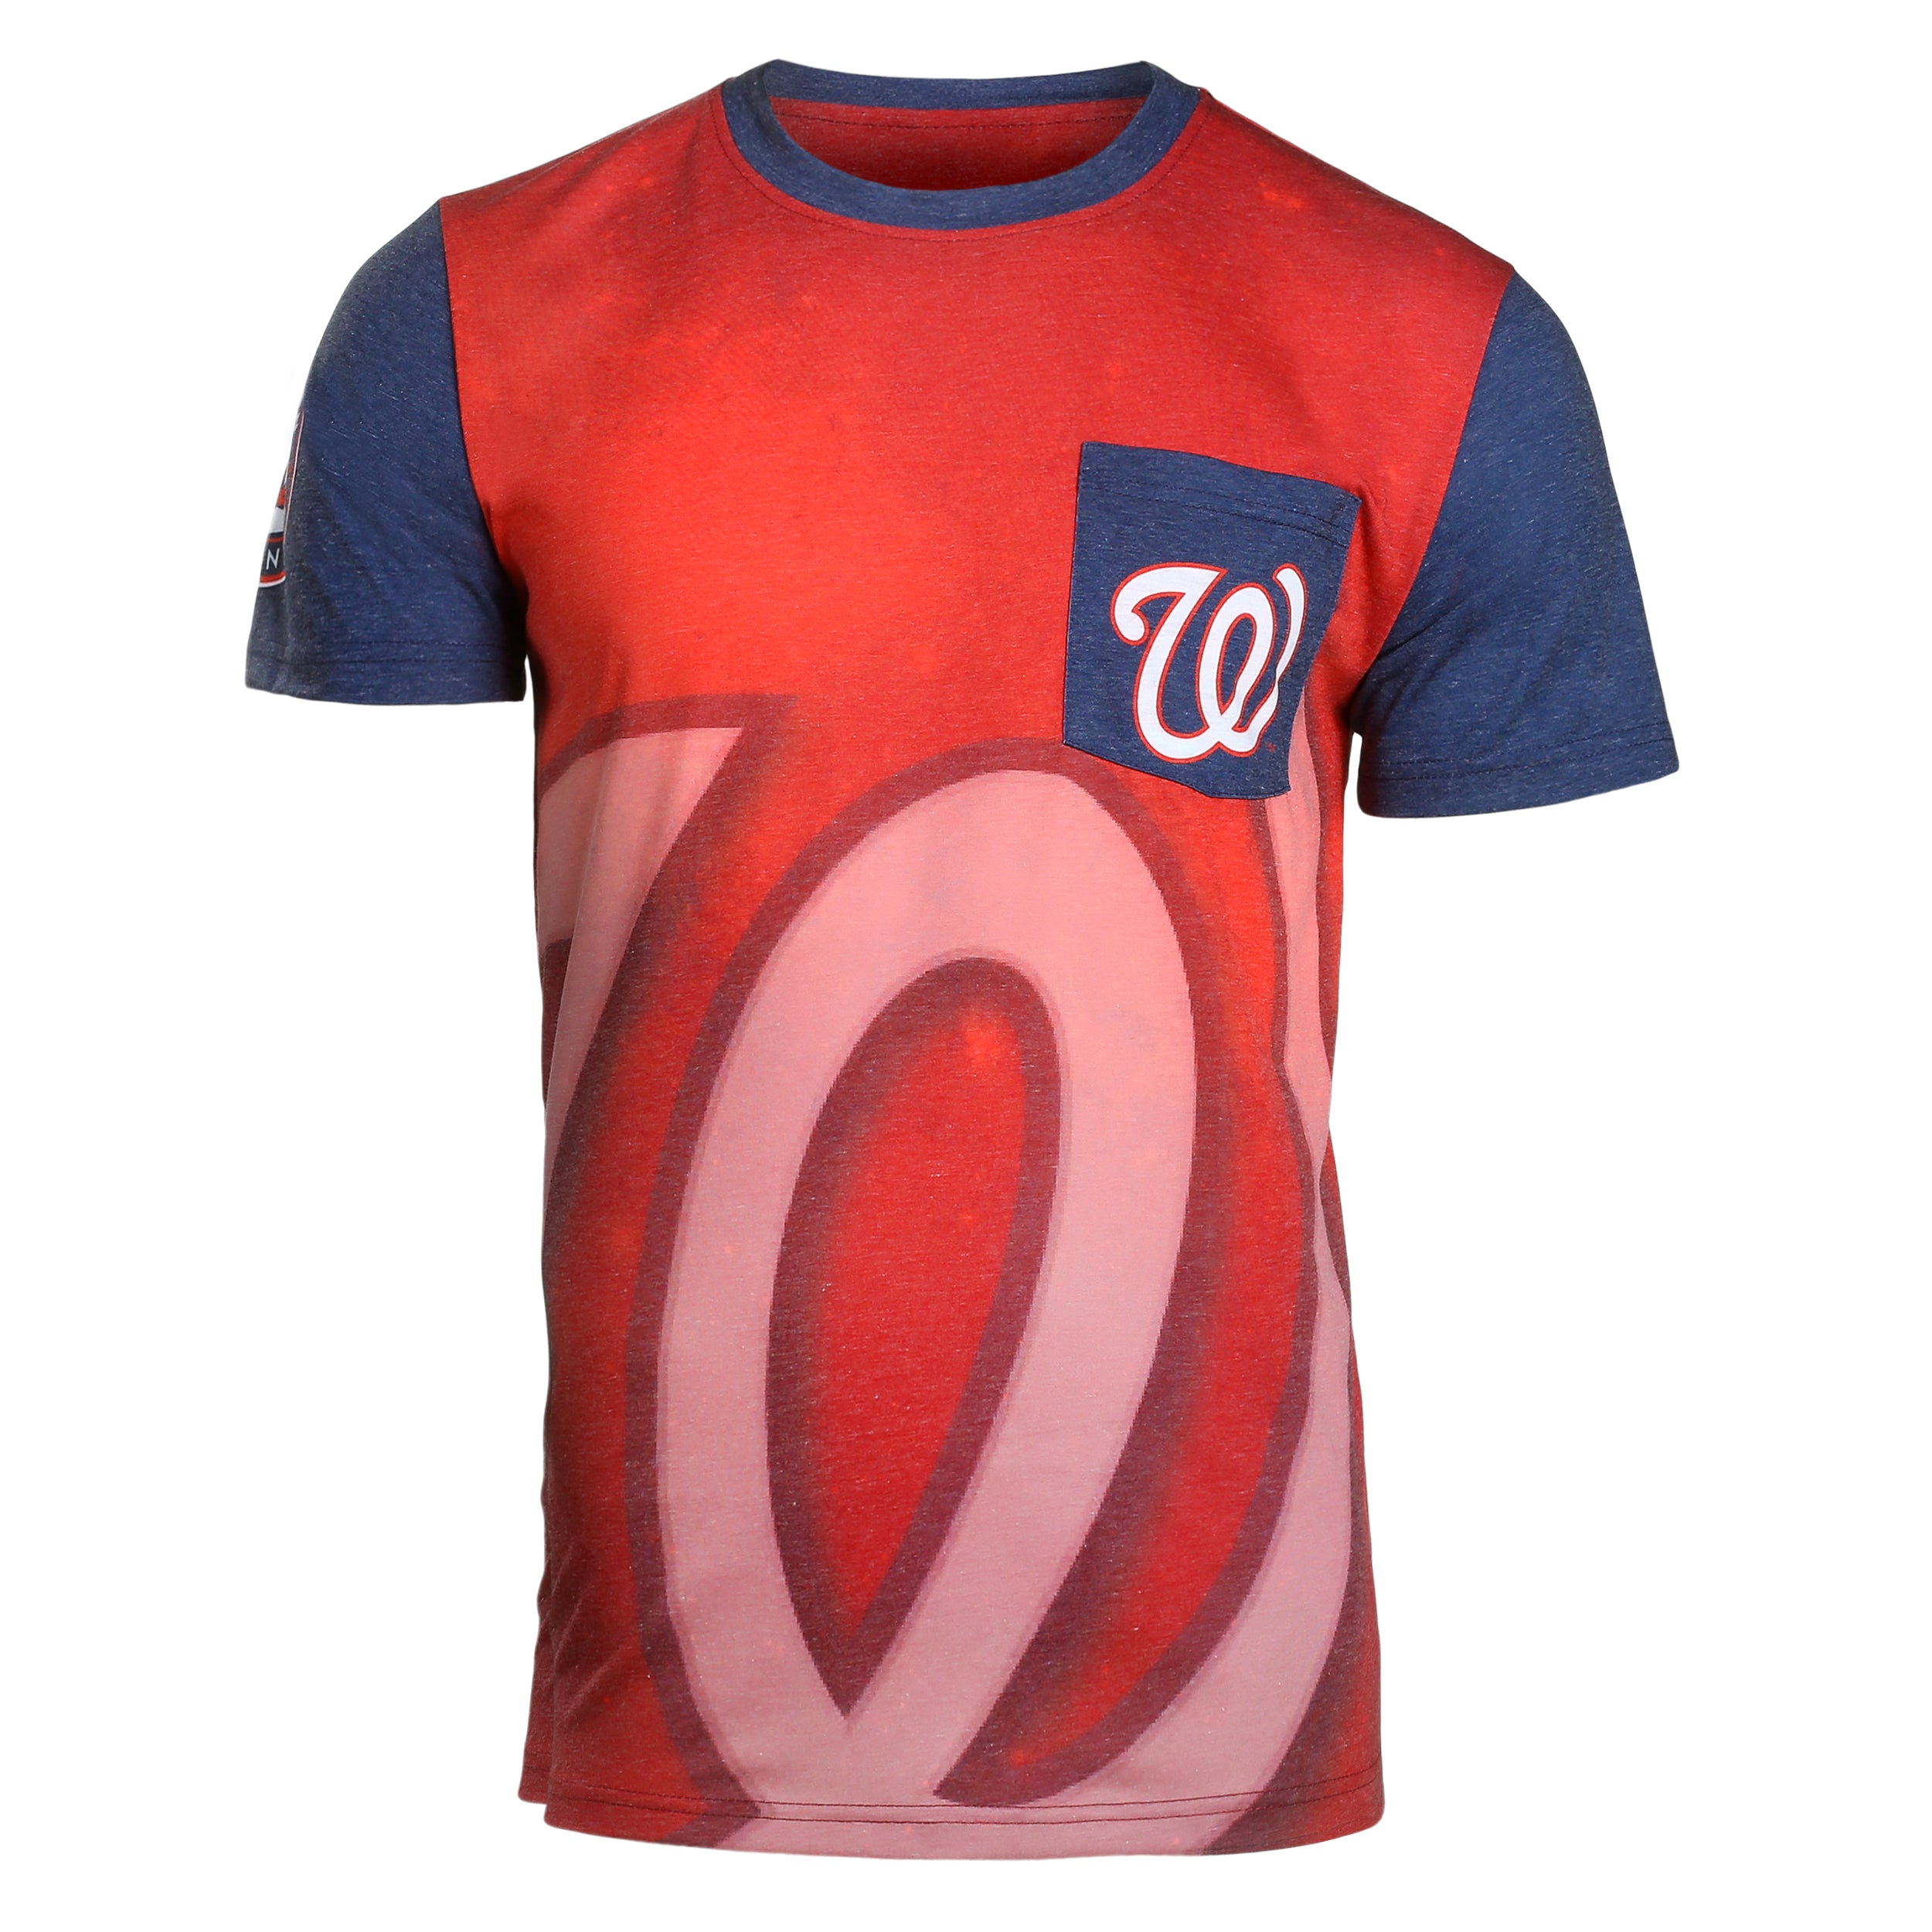 Klew MLB Men's Washington Nationals Big Graphics Pocket Logo Tee T-Shirt, Red Small